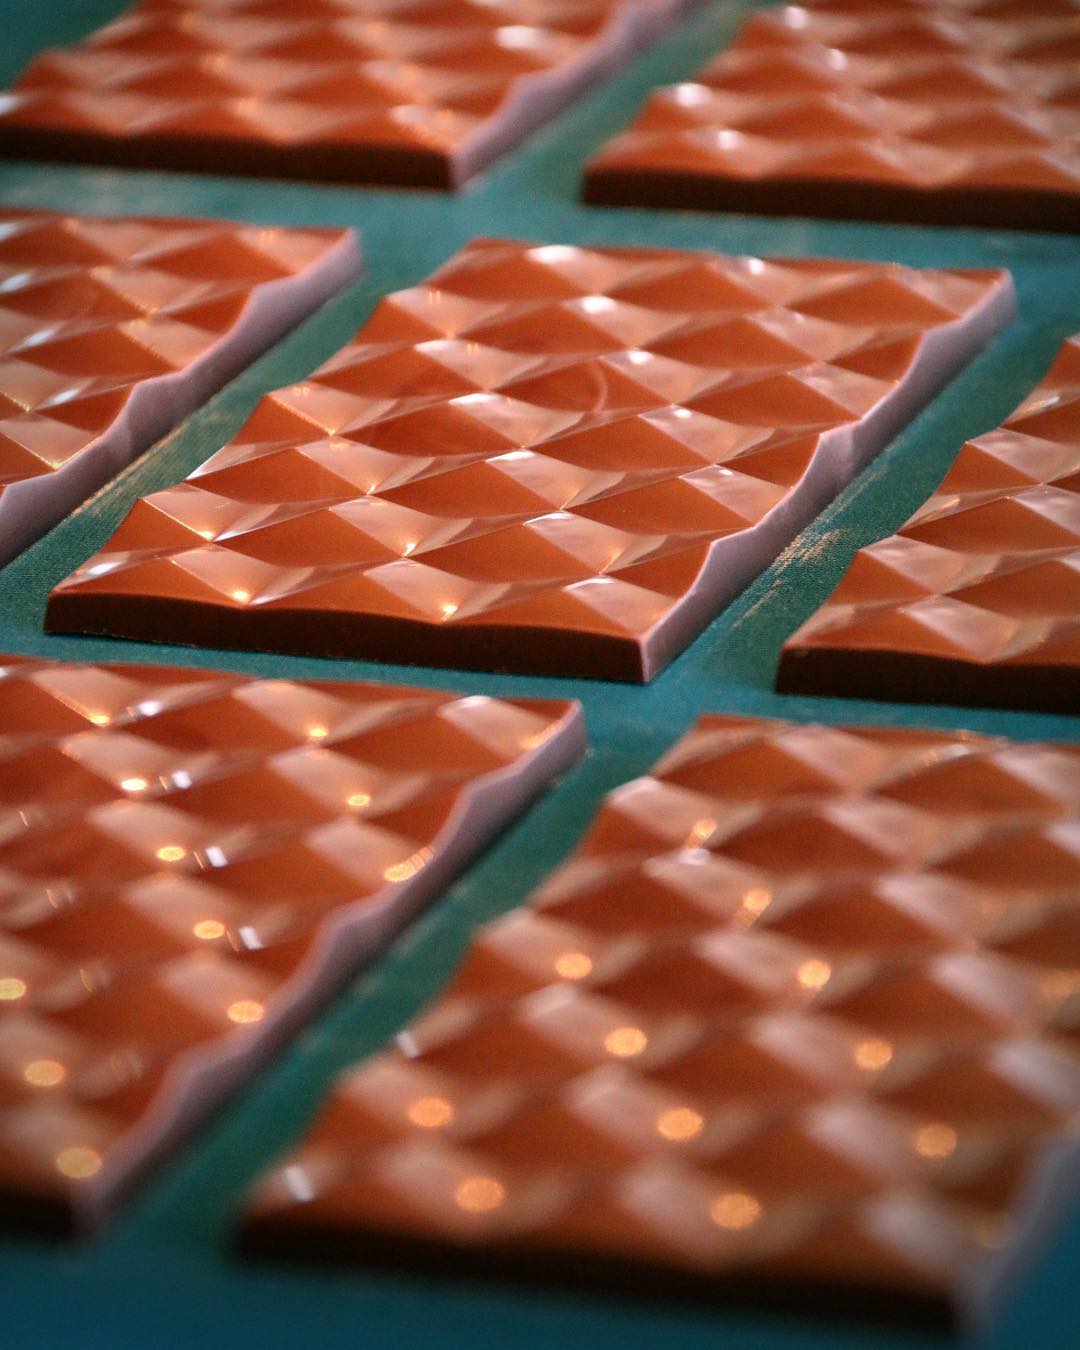 A group of Foundry Chocolate - Soconusco, Chiapas, Mexico 70% tiles on a table.